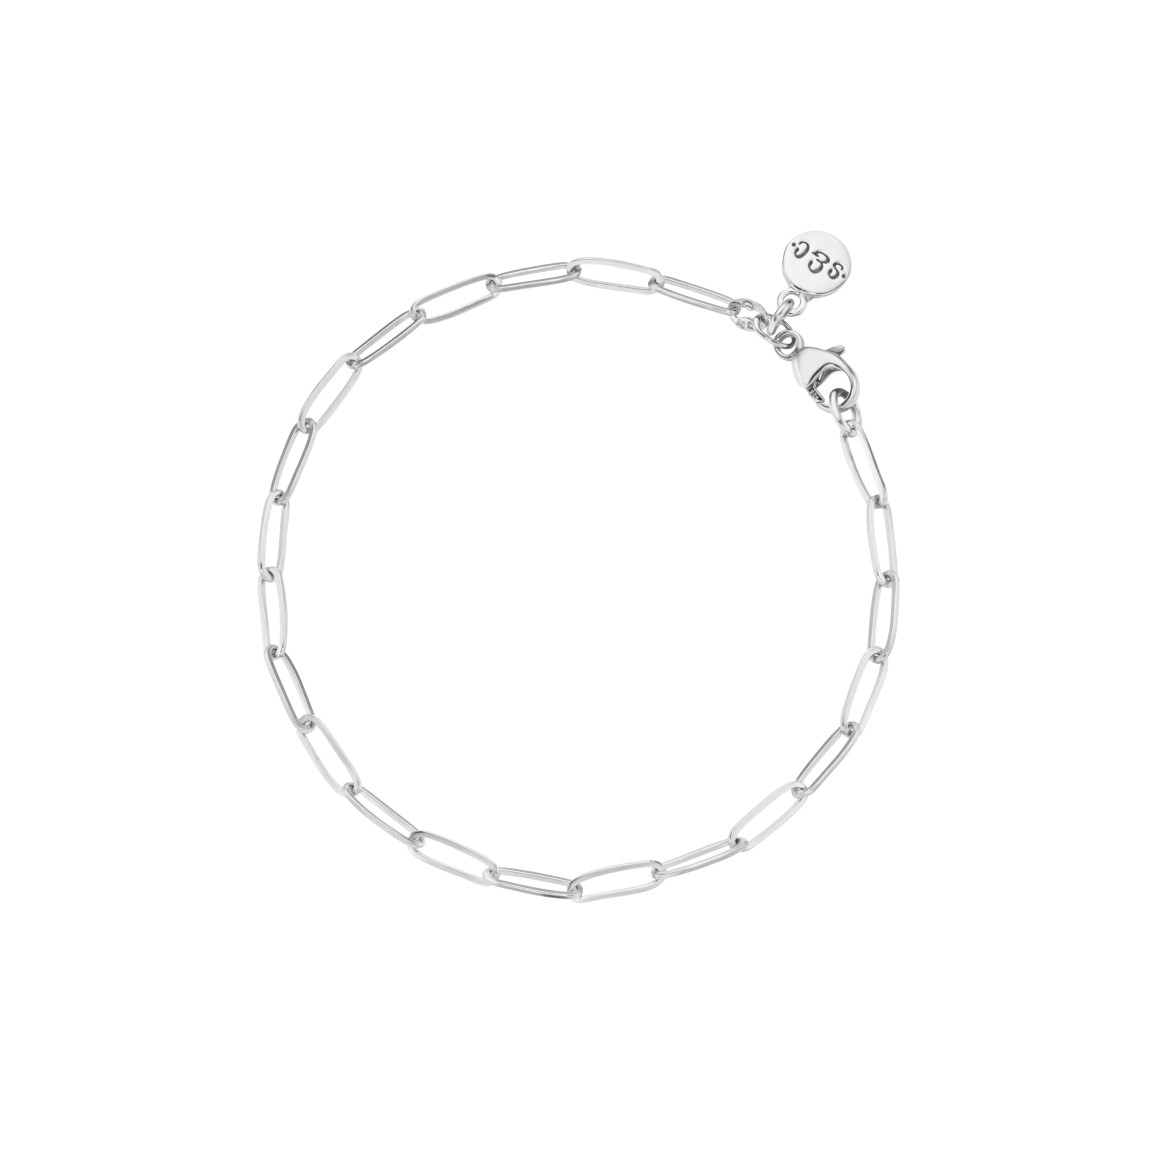 Small link bracelet Sterling silver